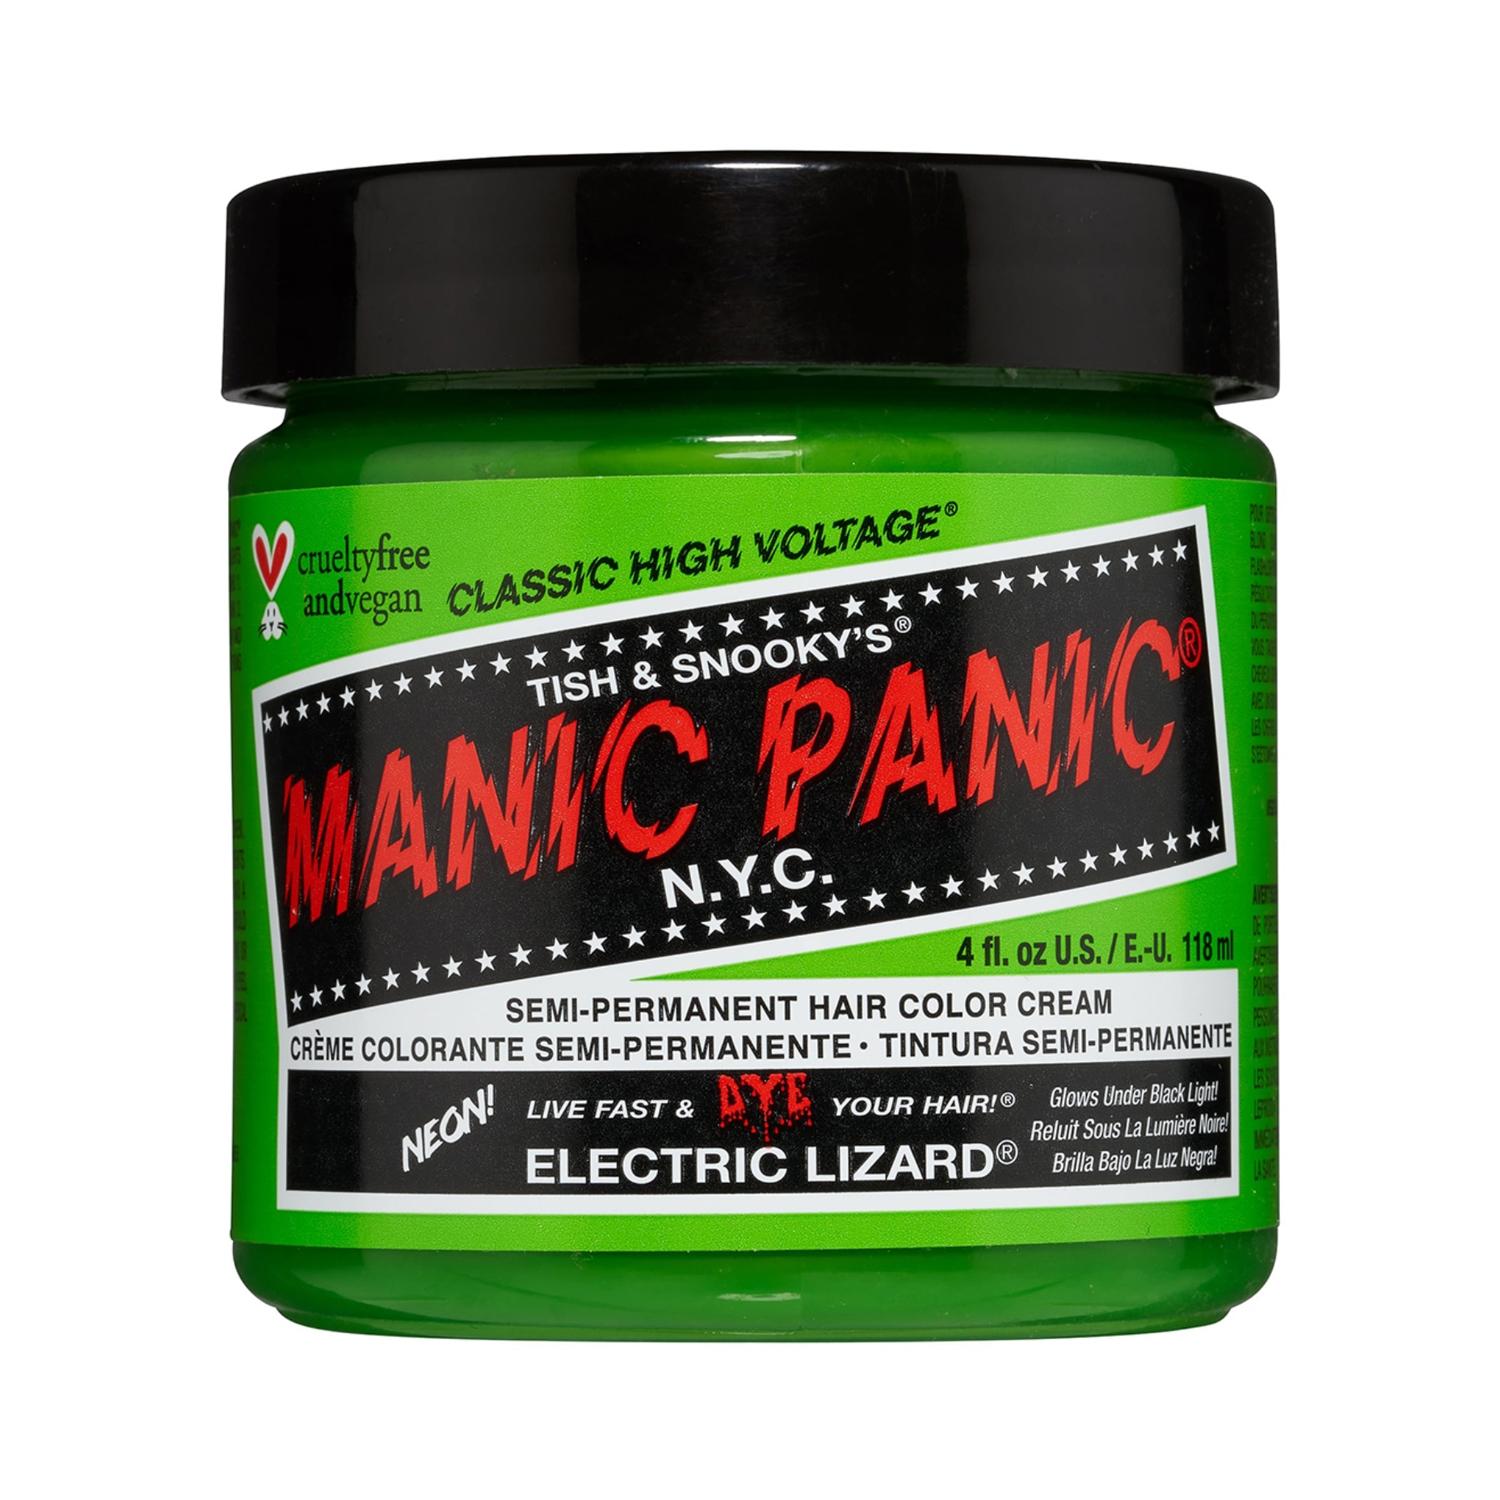 manic panic classic high voltage semi permanent hair color cream - electric lizard (118ml)